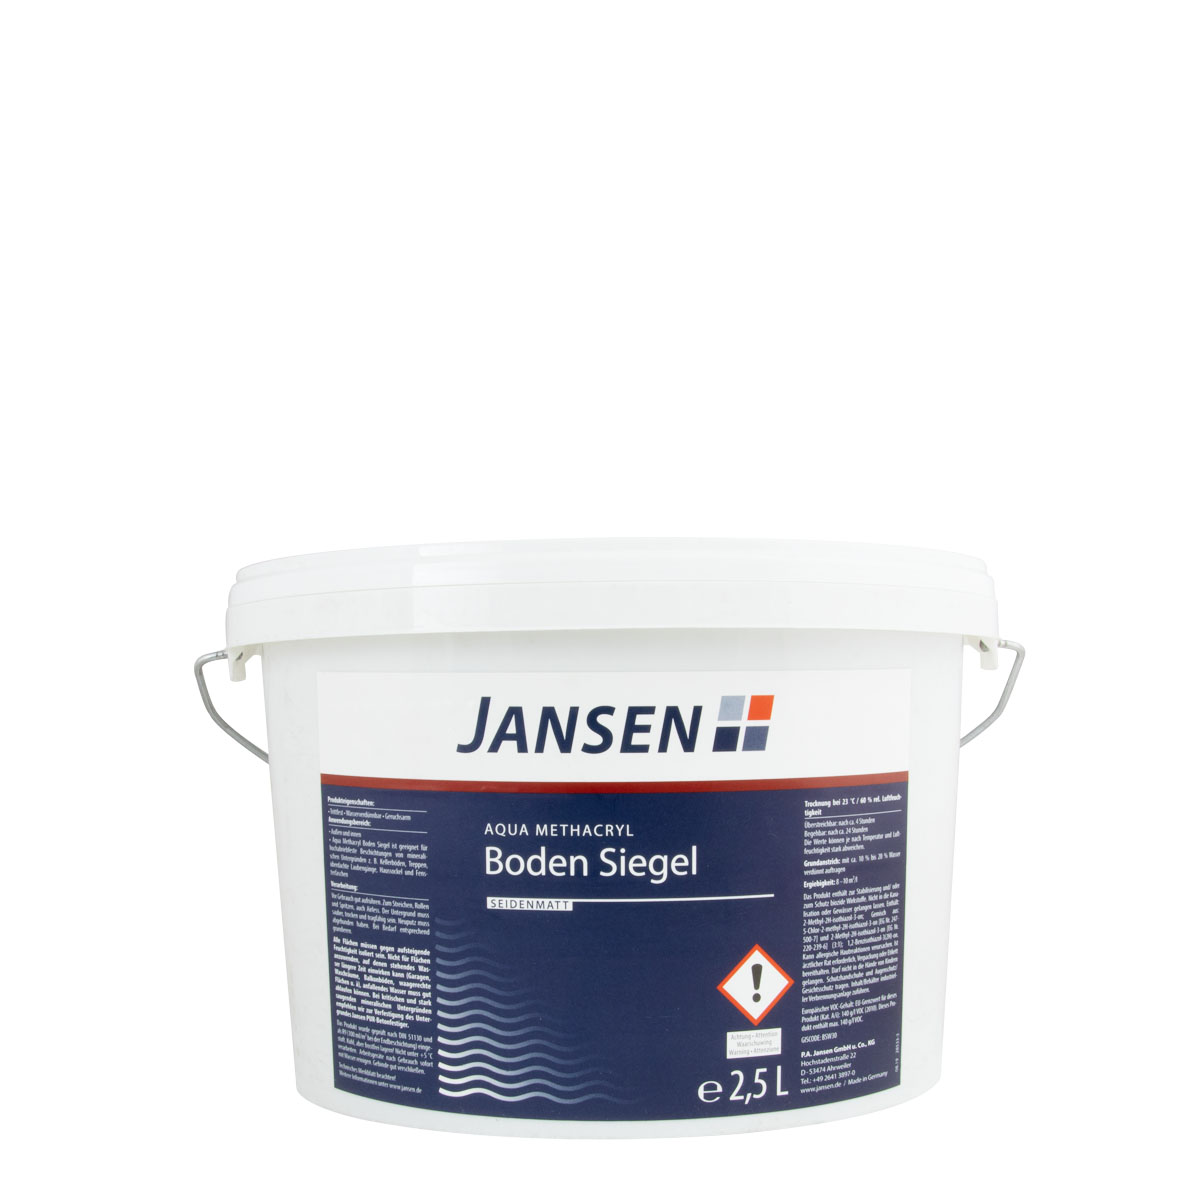 Jansen Aqua Methacryl Boden Siegel 2,5L, kieselgrau